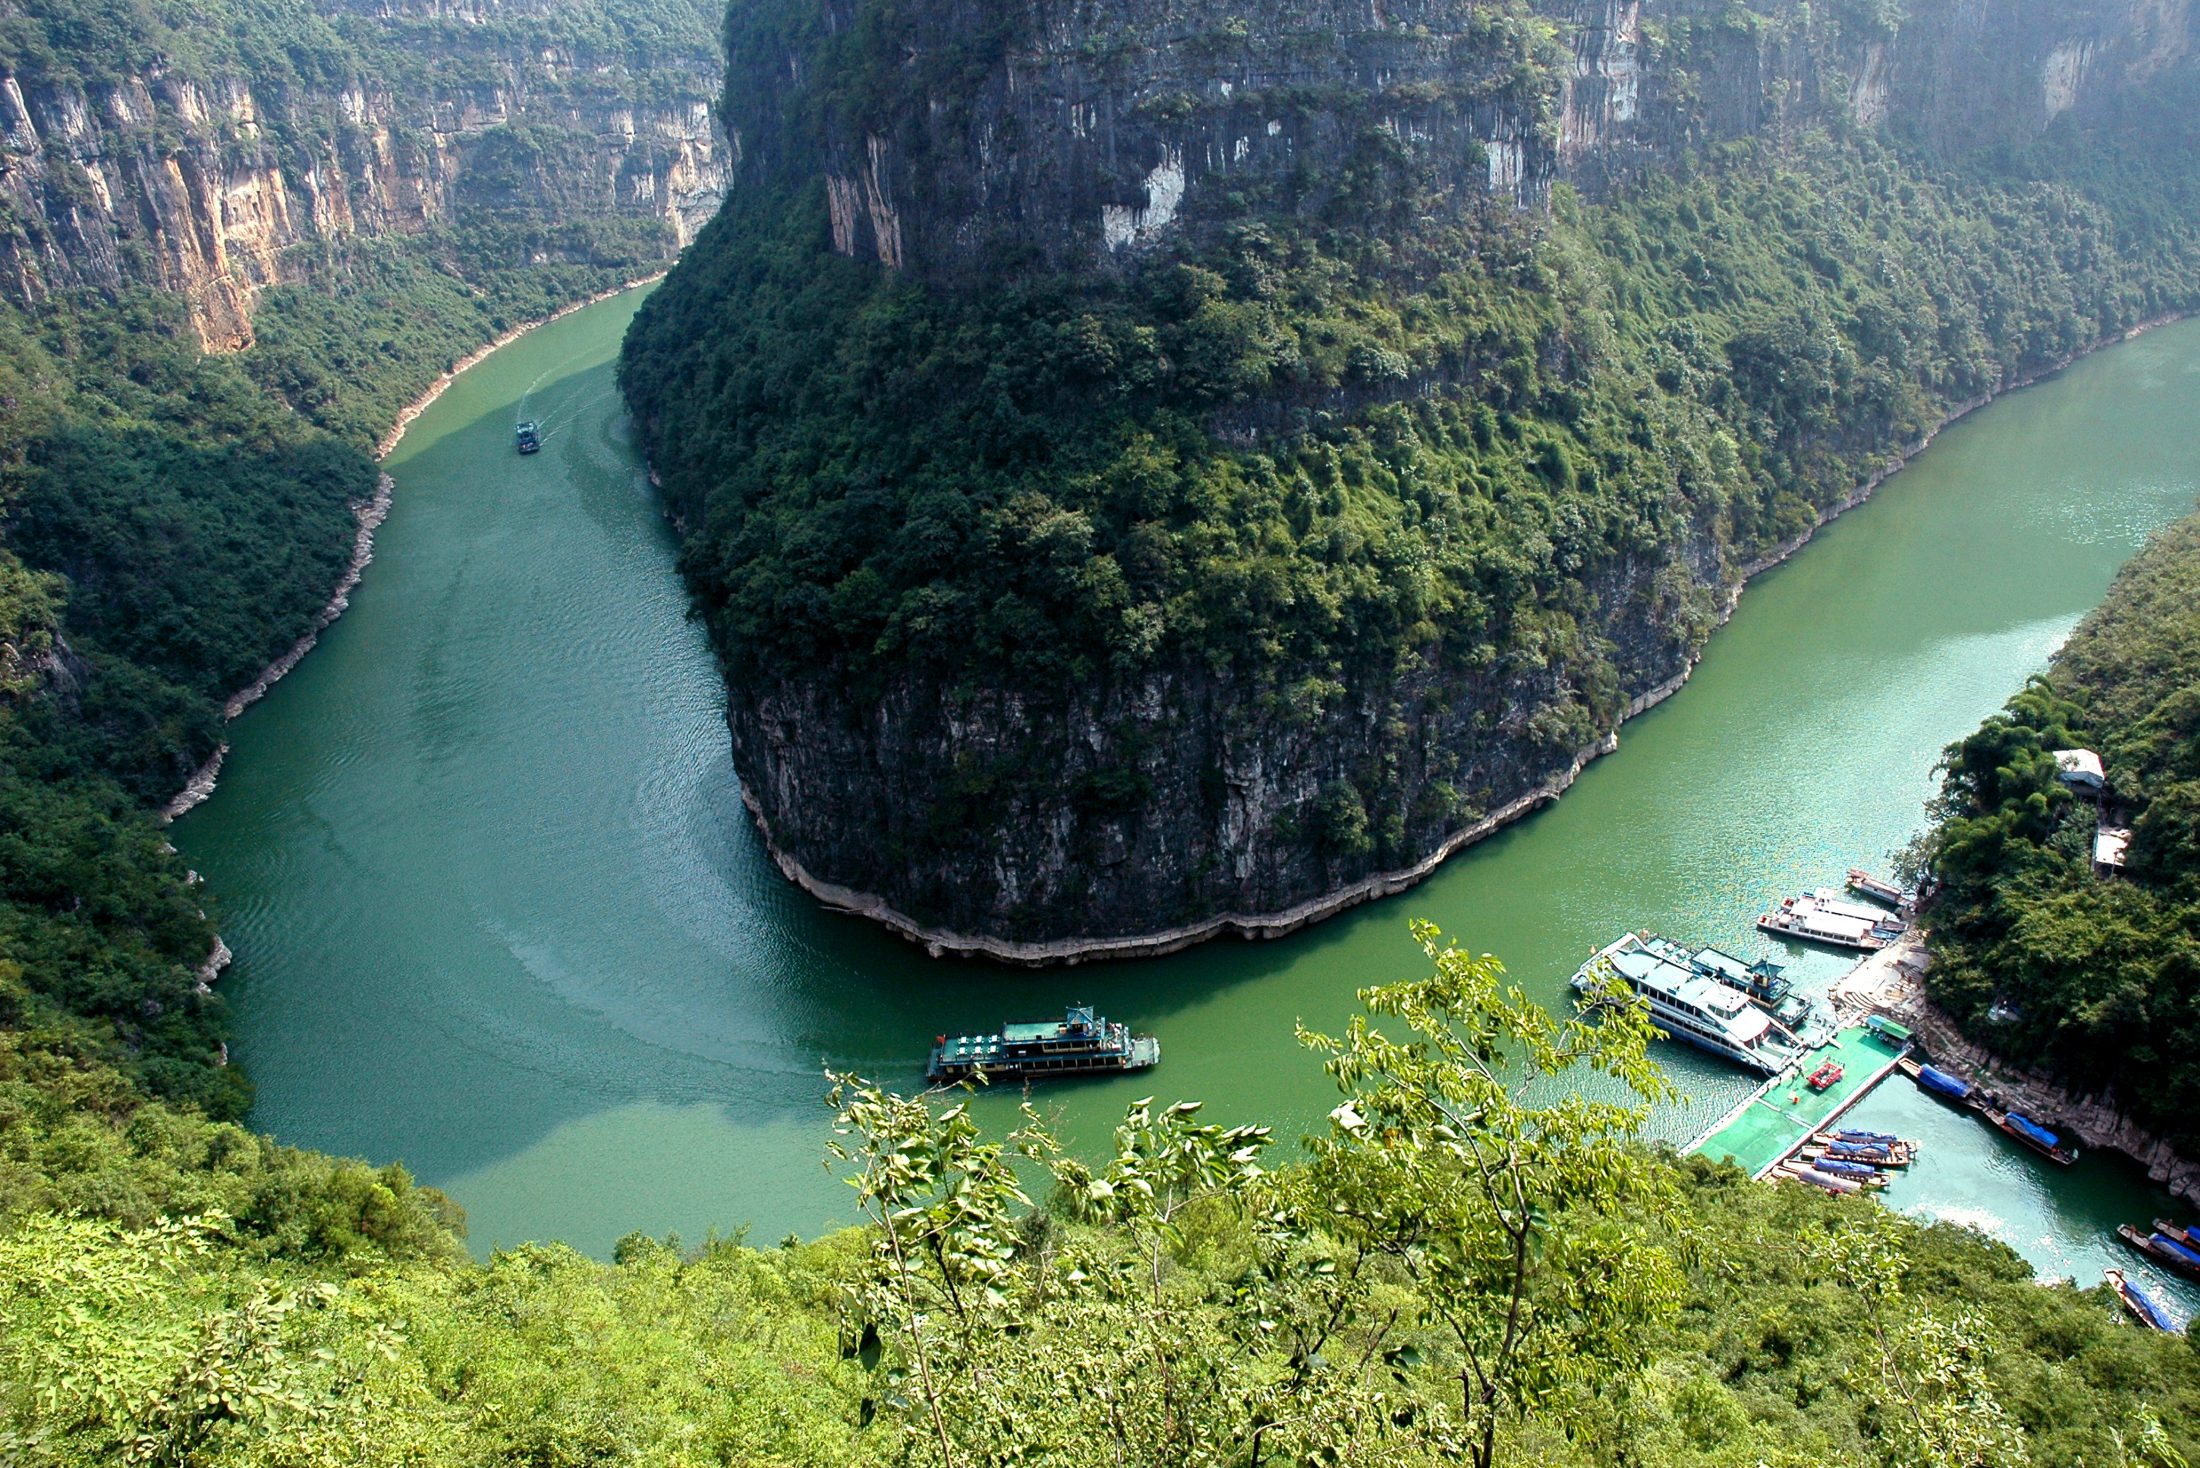 Yangtze River overlook